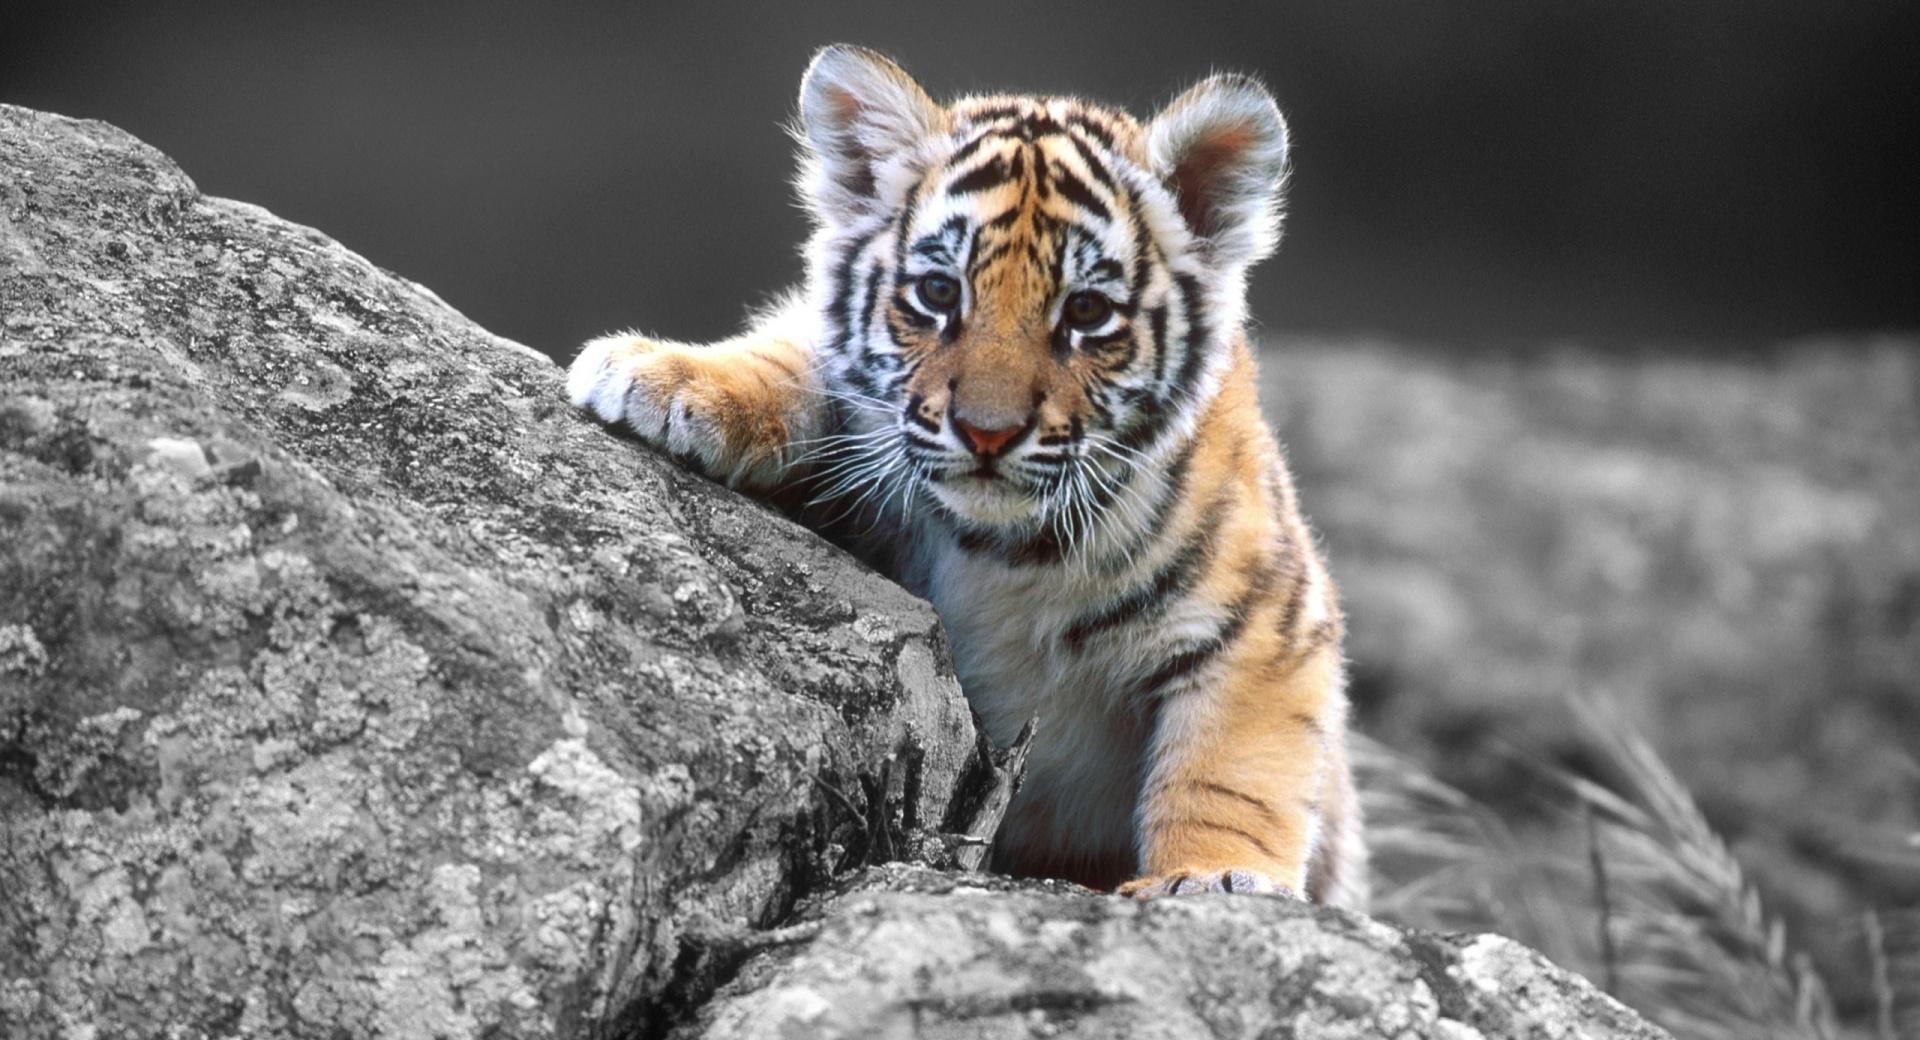 Cute Tiger Cub at 2048 x 2048 iPad size wallpapers HD quality